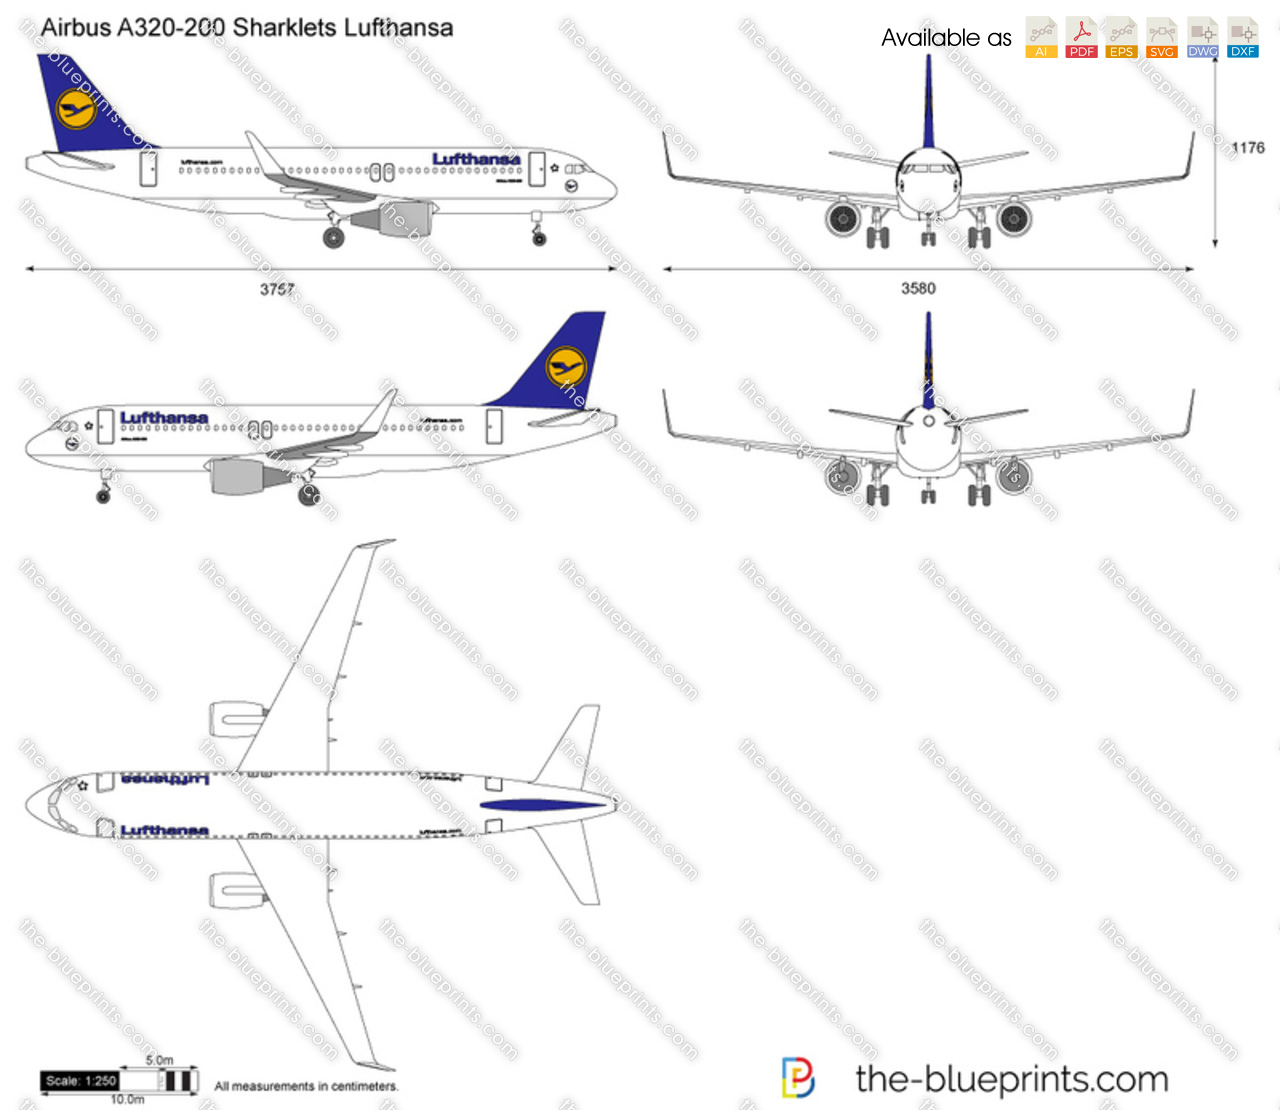 Airbus A320-200 Sharklets Lufthansa